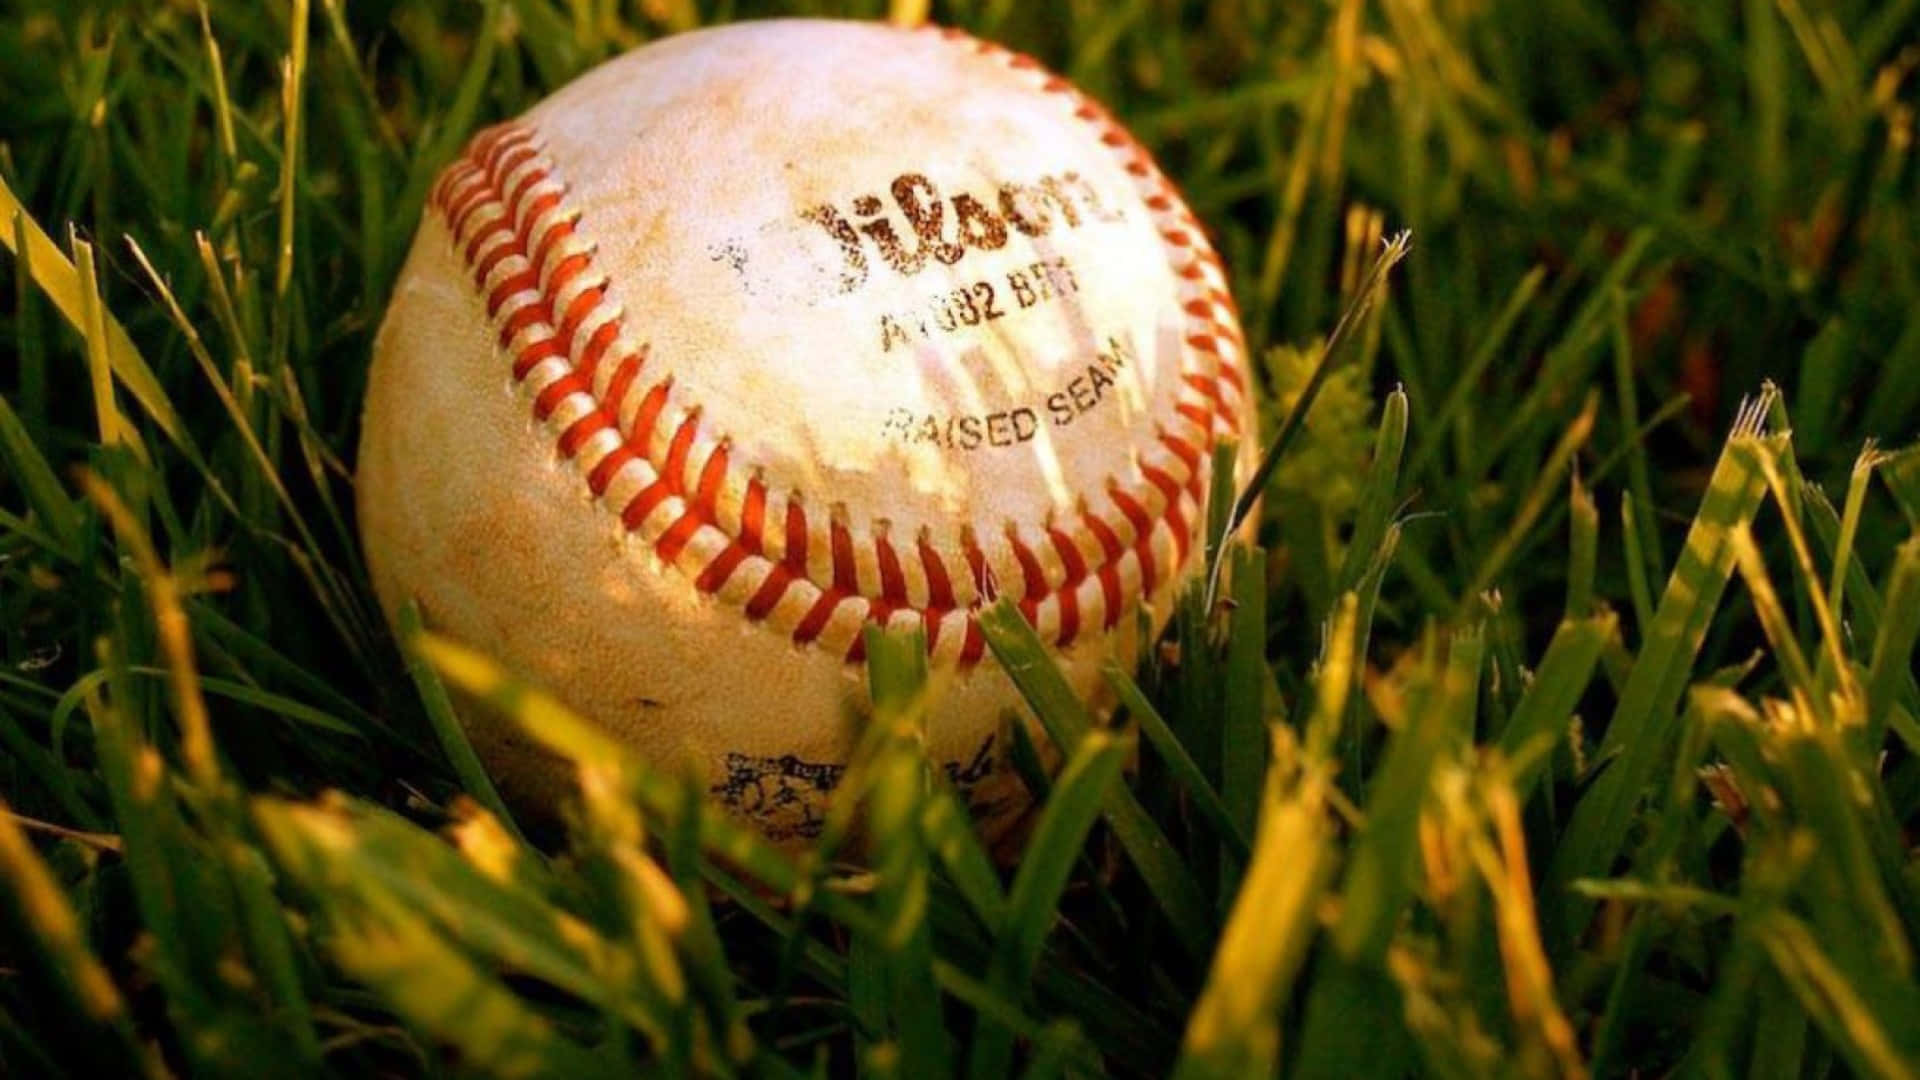 Take Your Best Swing - Softball